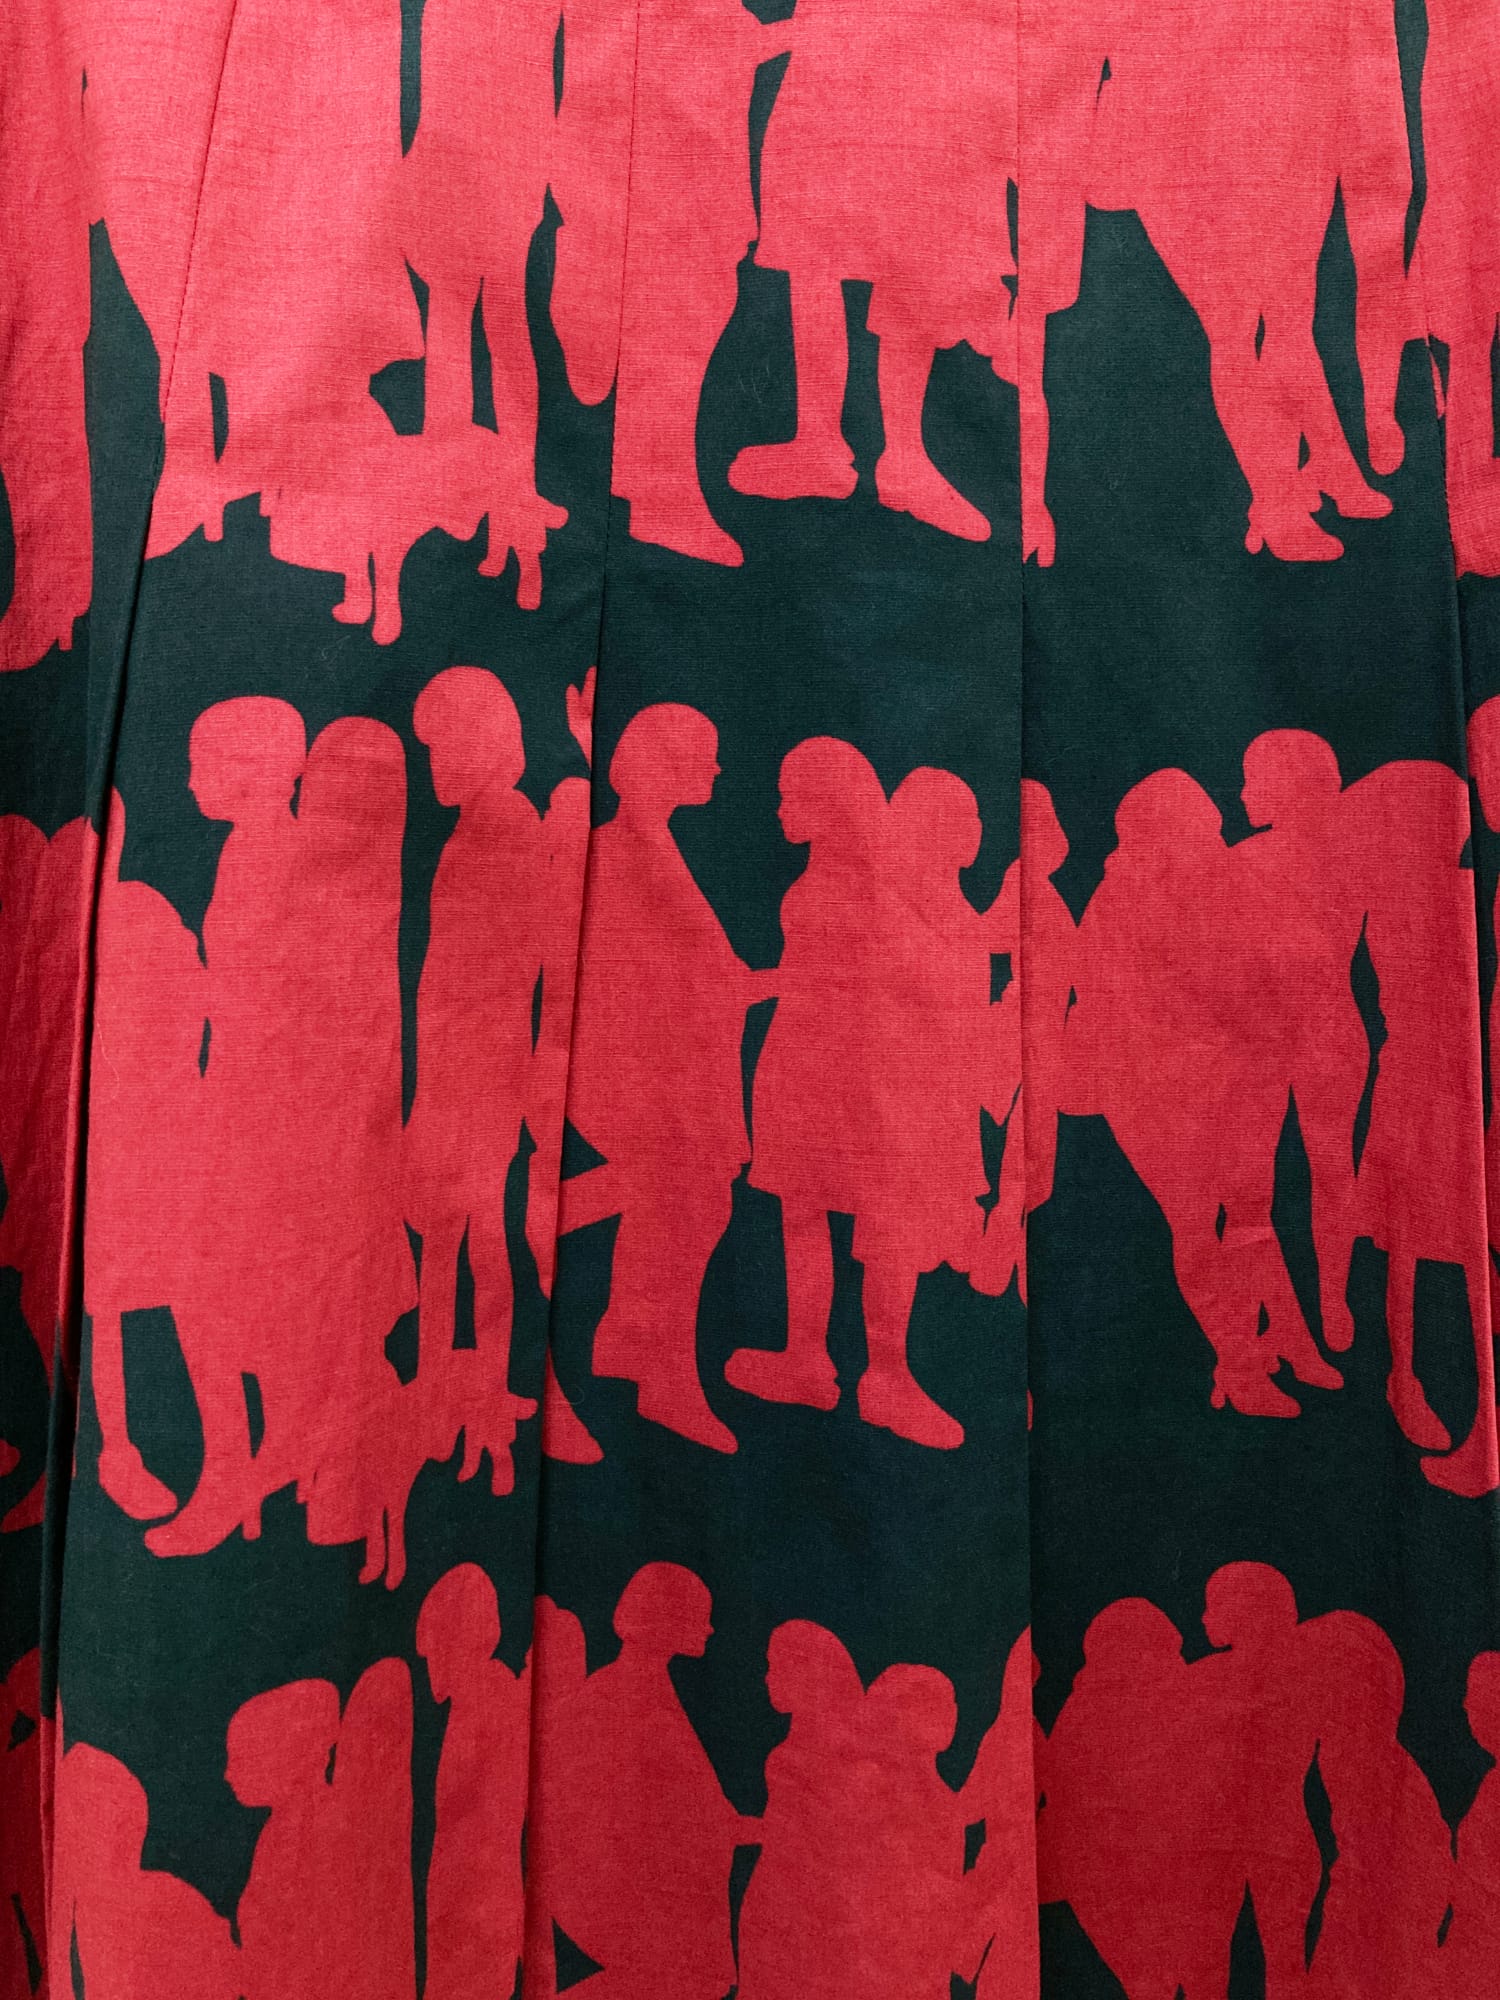 Jocomomola de Sybilla red pleated skirt with print of dancing silhouettes - 40